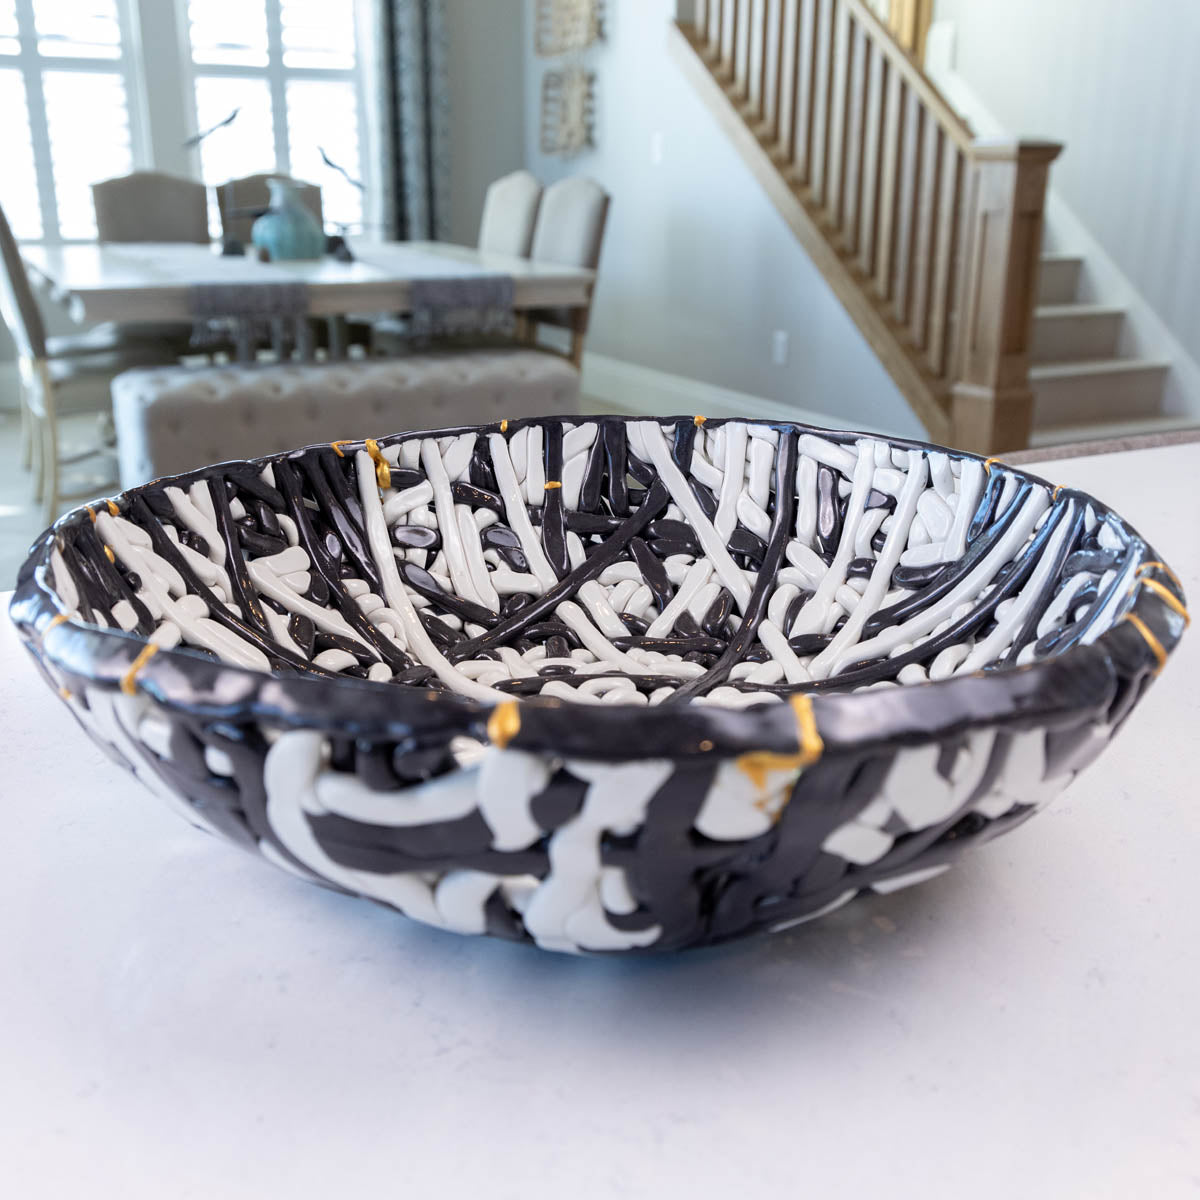 XXL Kintsugi Black & White Porcelain Interlacing Coil Decorative Bowl (Alchemy Collection)